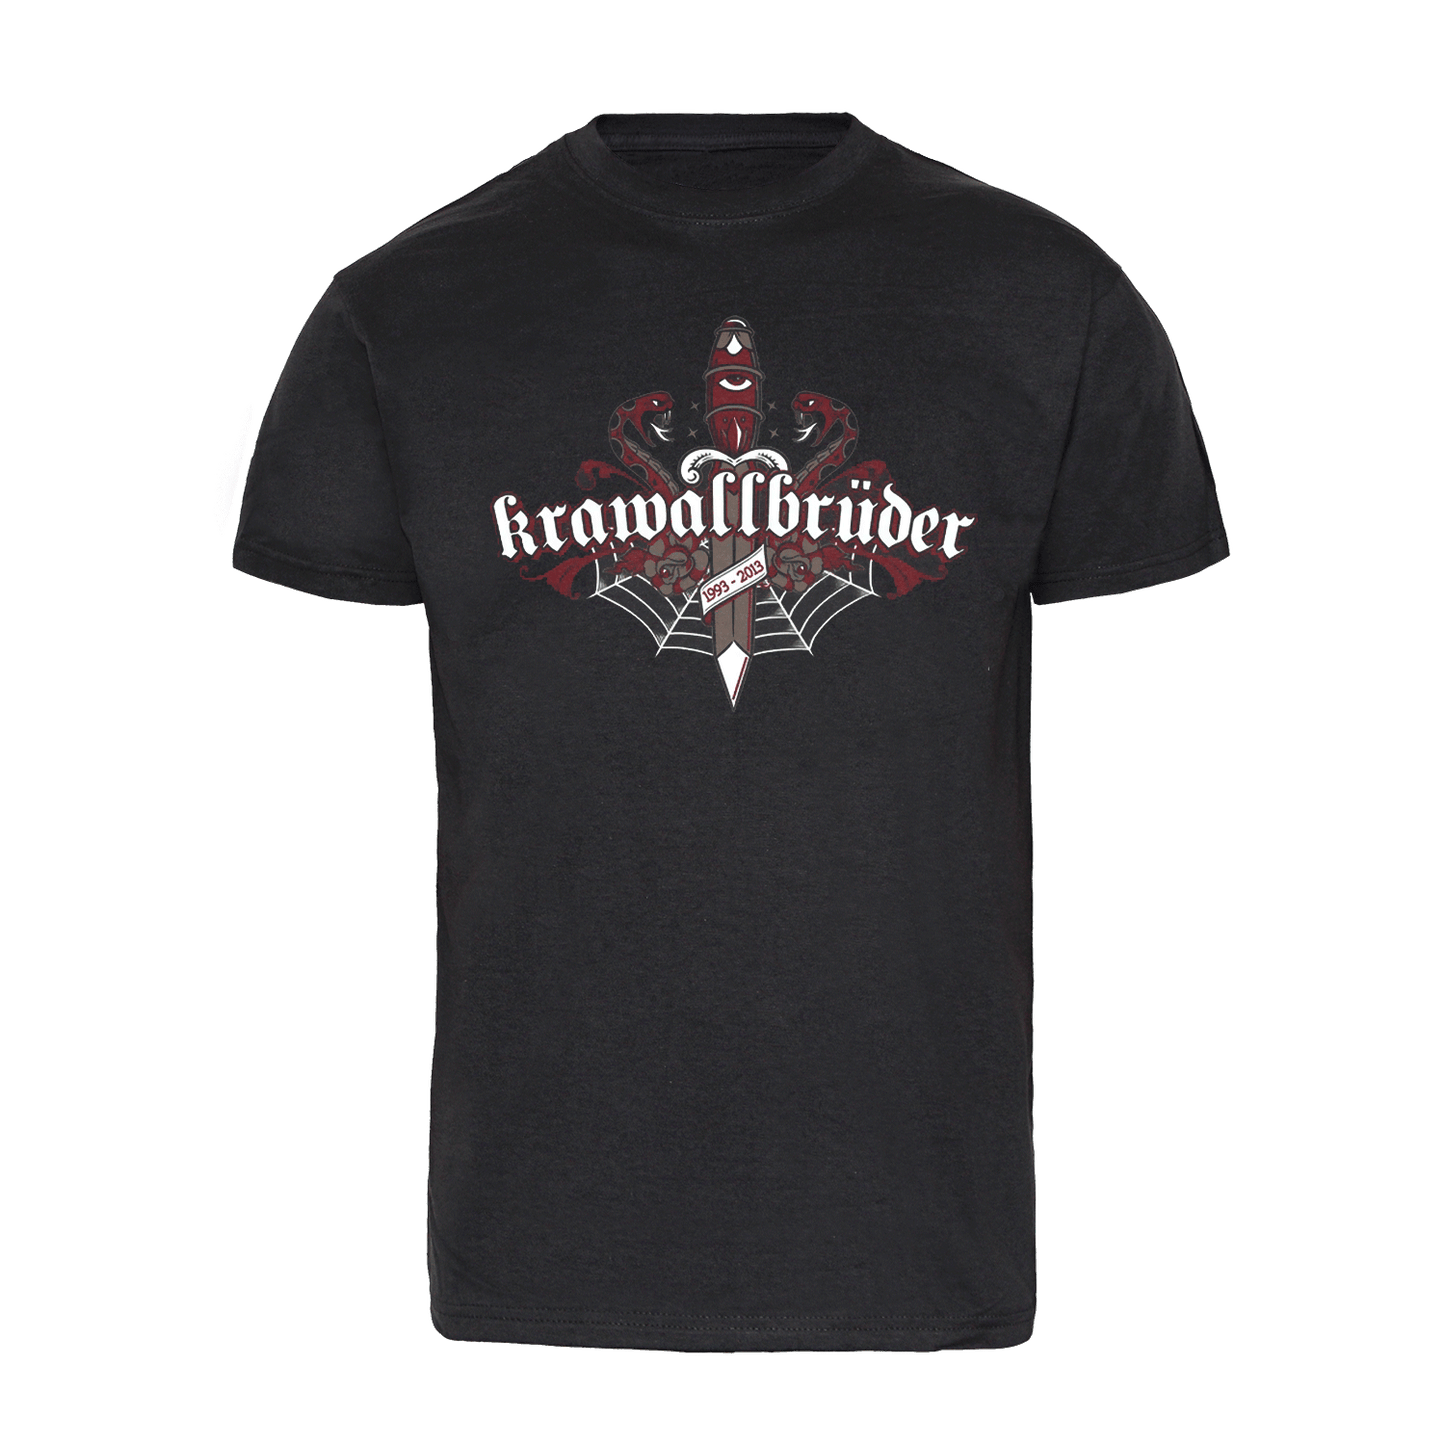 Krawallbrüder "Oldschool" T-Shirt